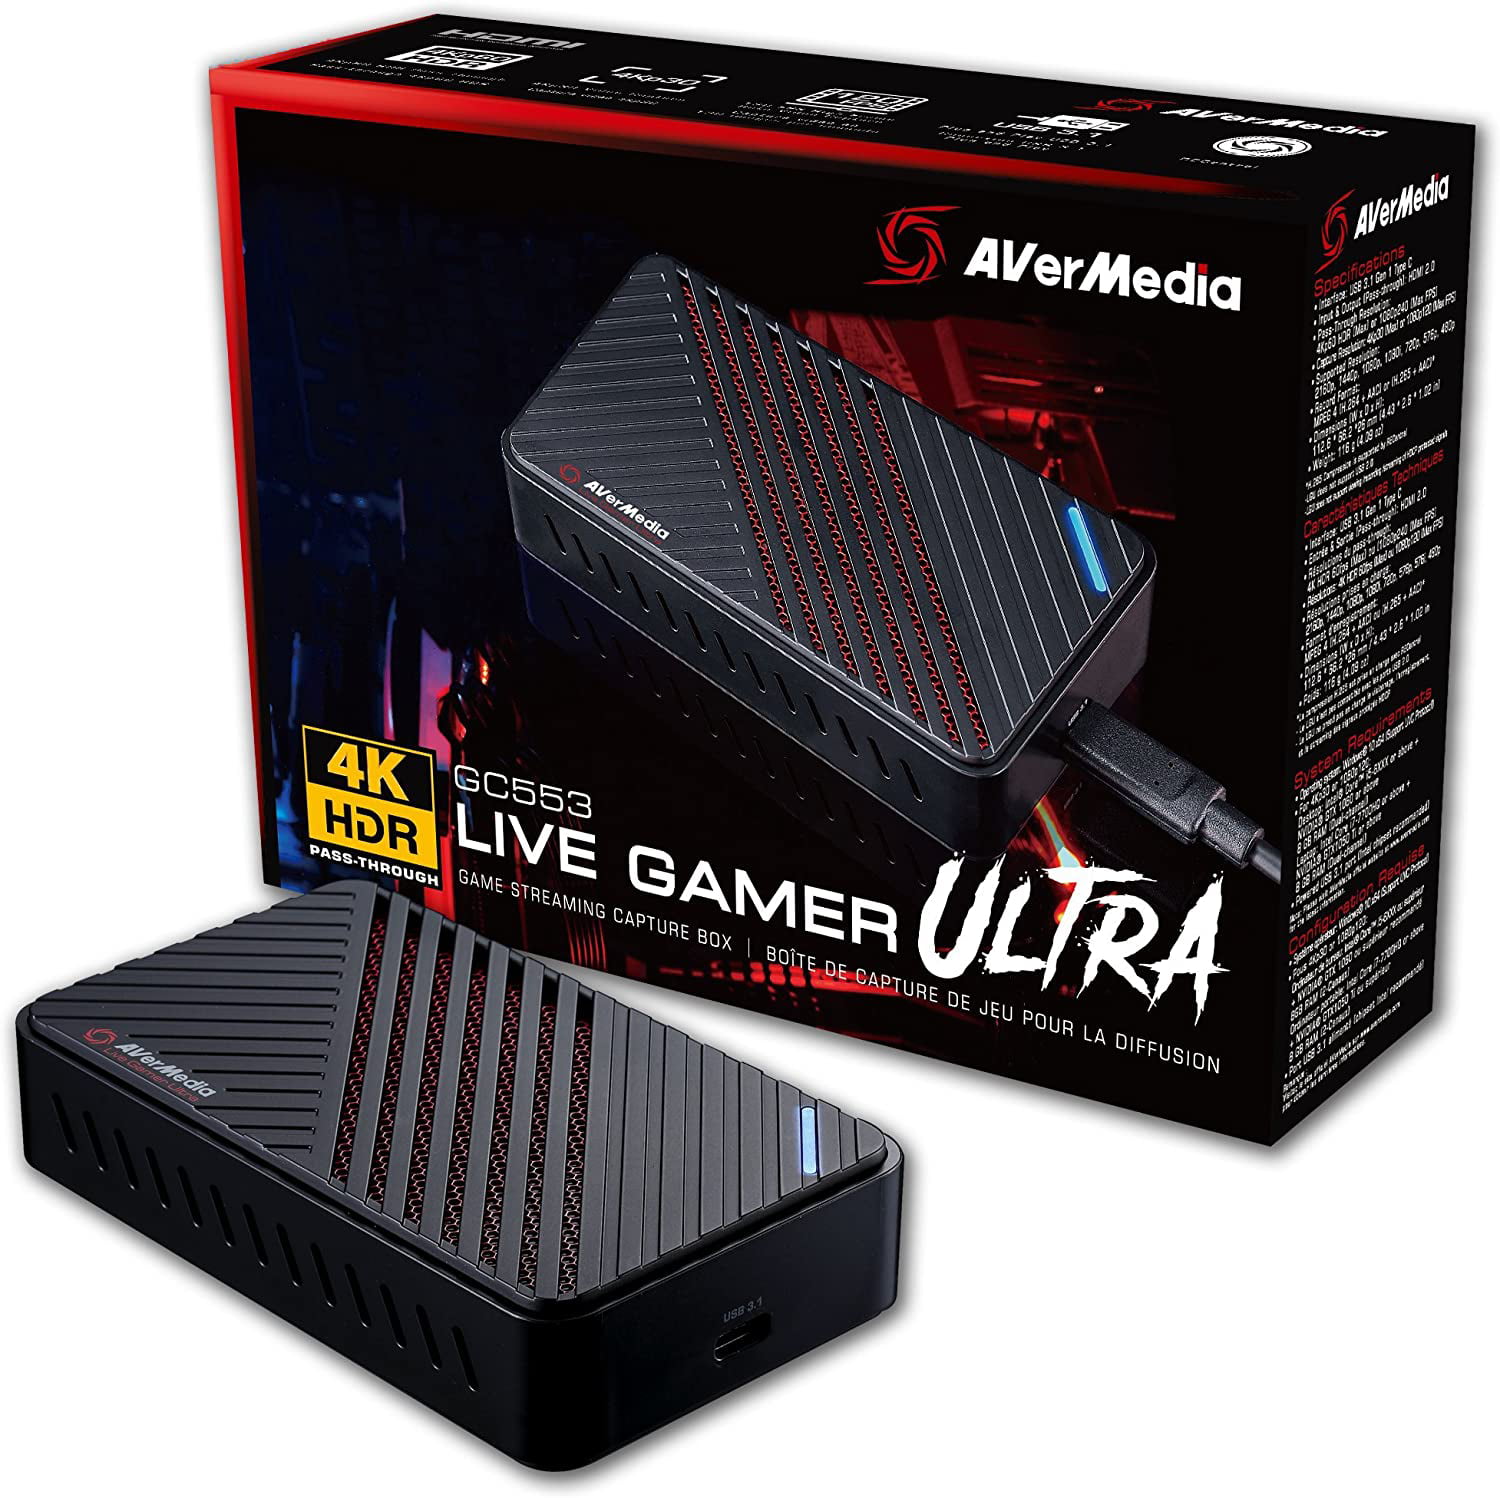 AVerMedia Live Gamer Ultra 2.1 Review